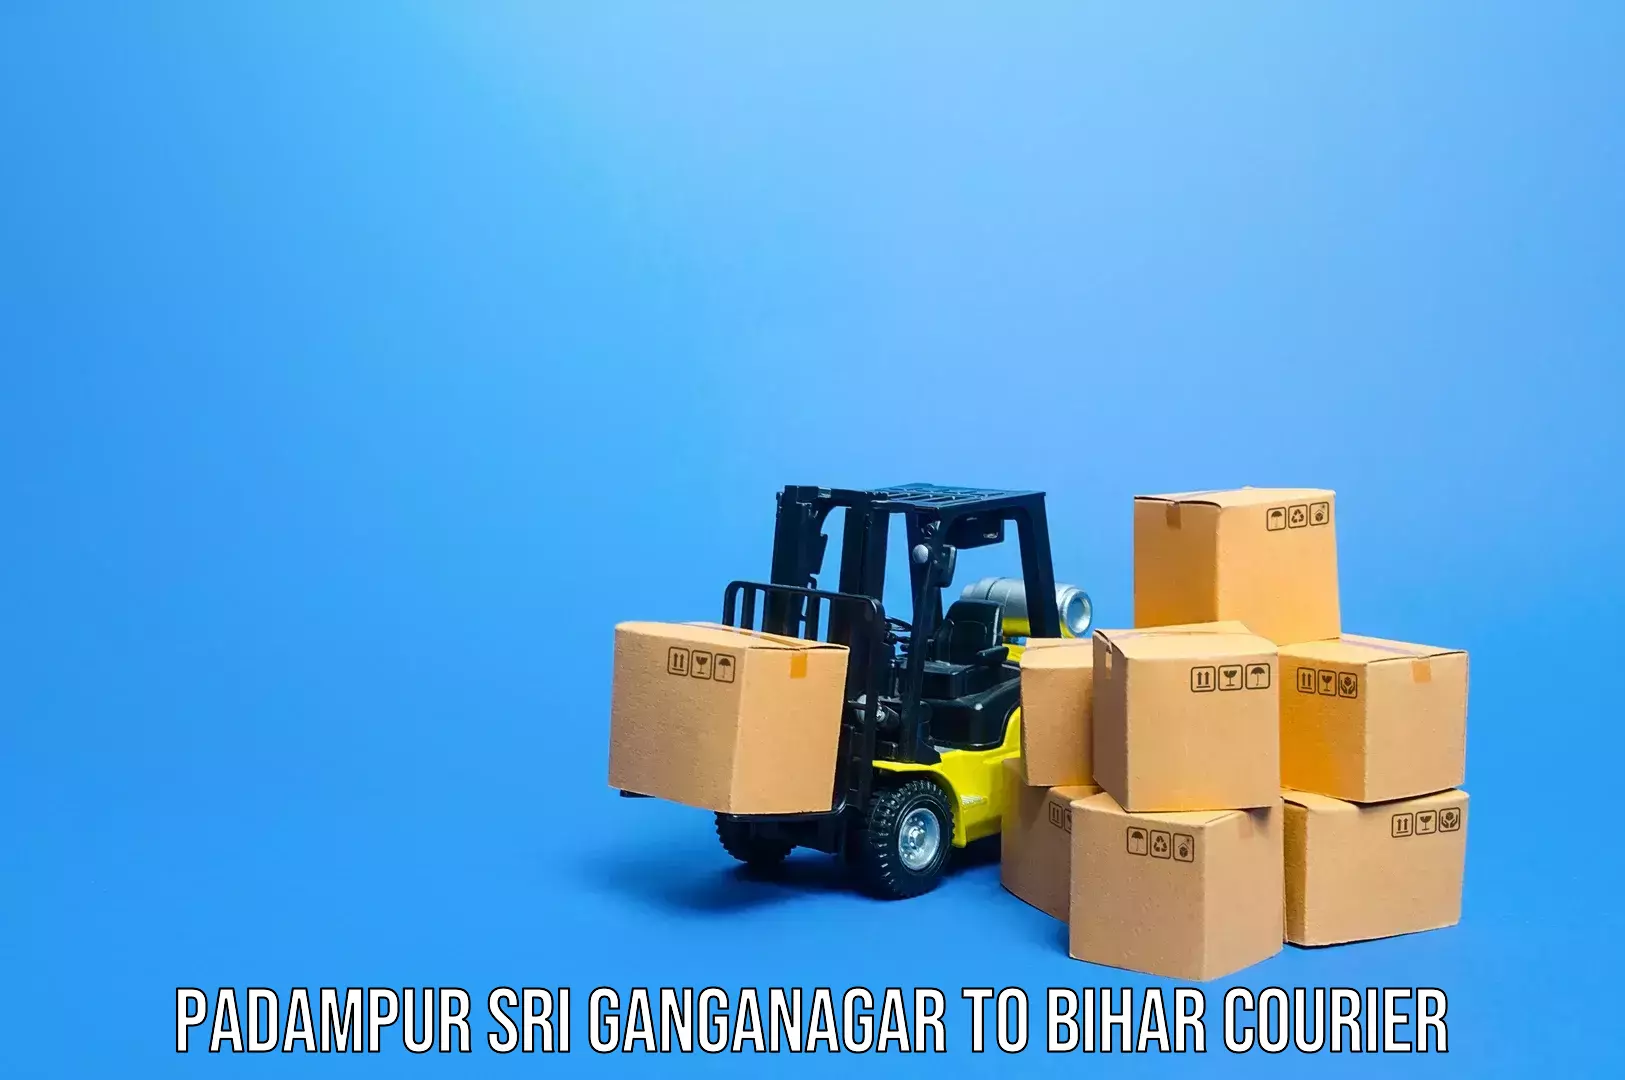 Luggage shipment specialists Padampur Sri Ganganagar to Goh Aurangabad